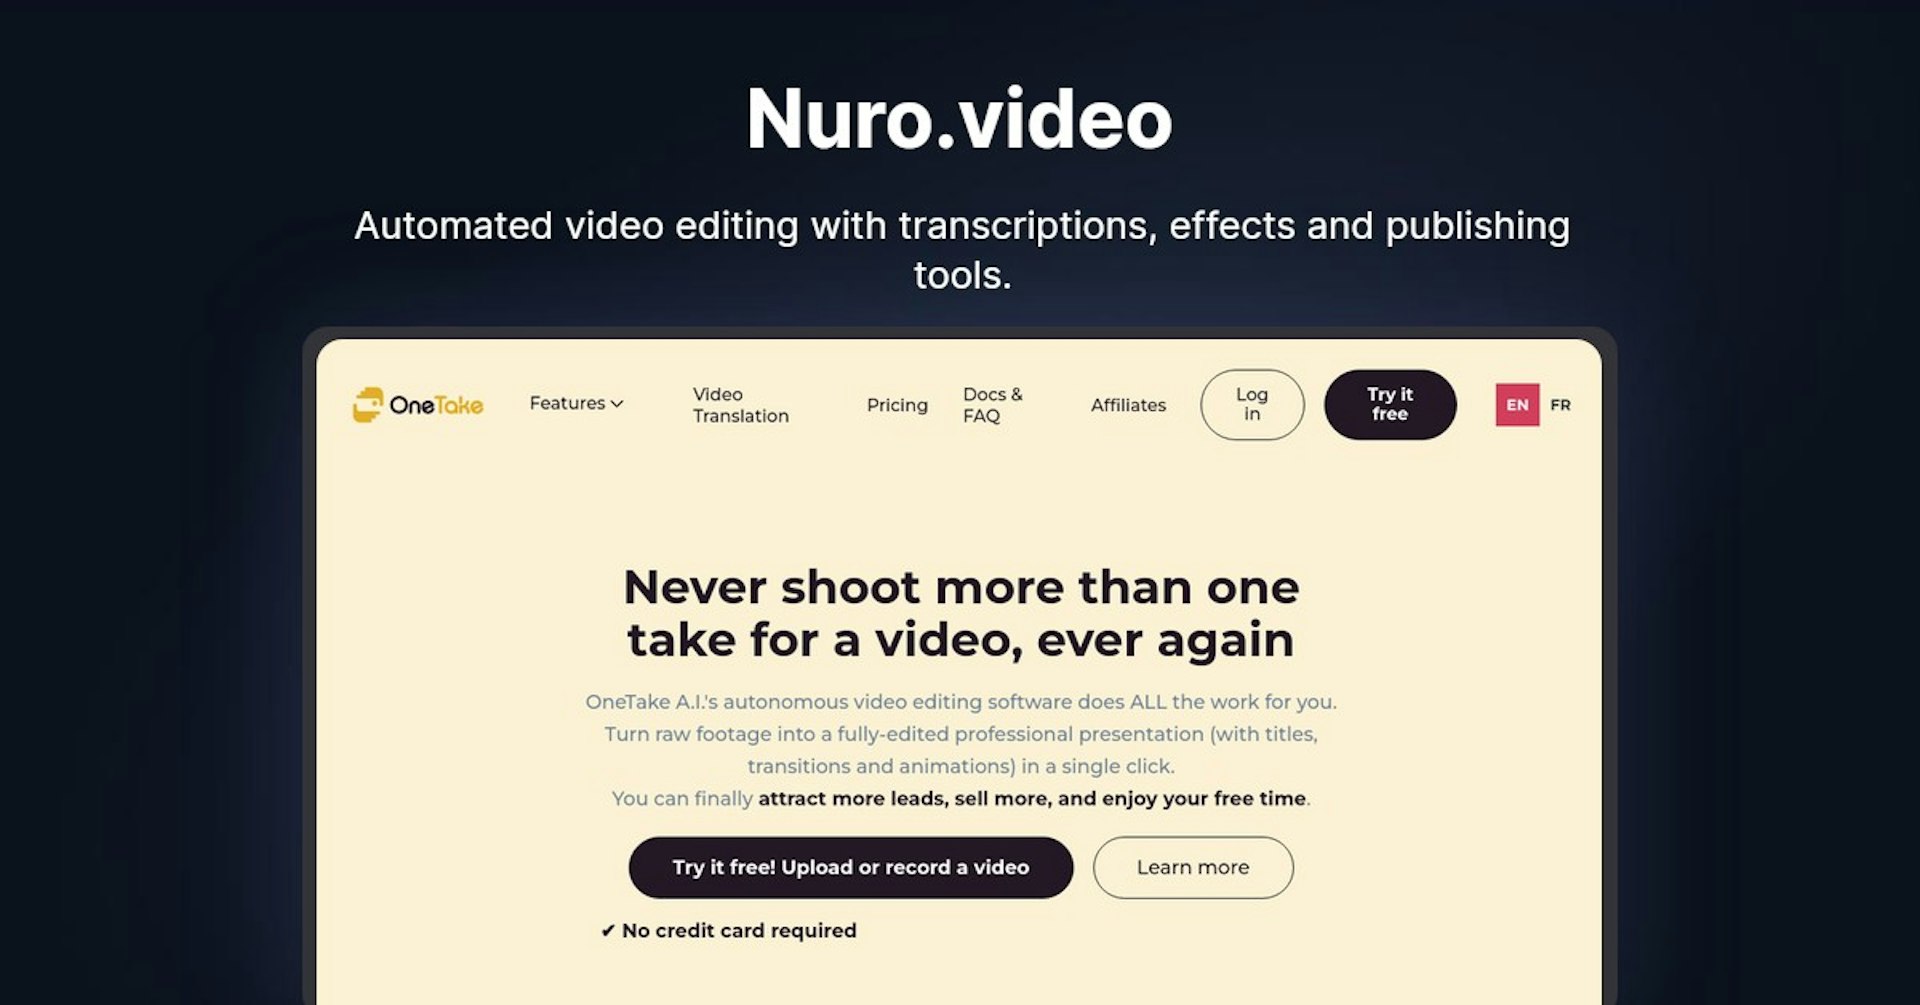 Nuro.video